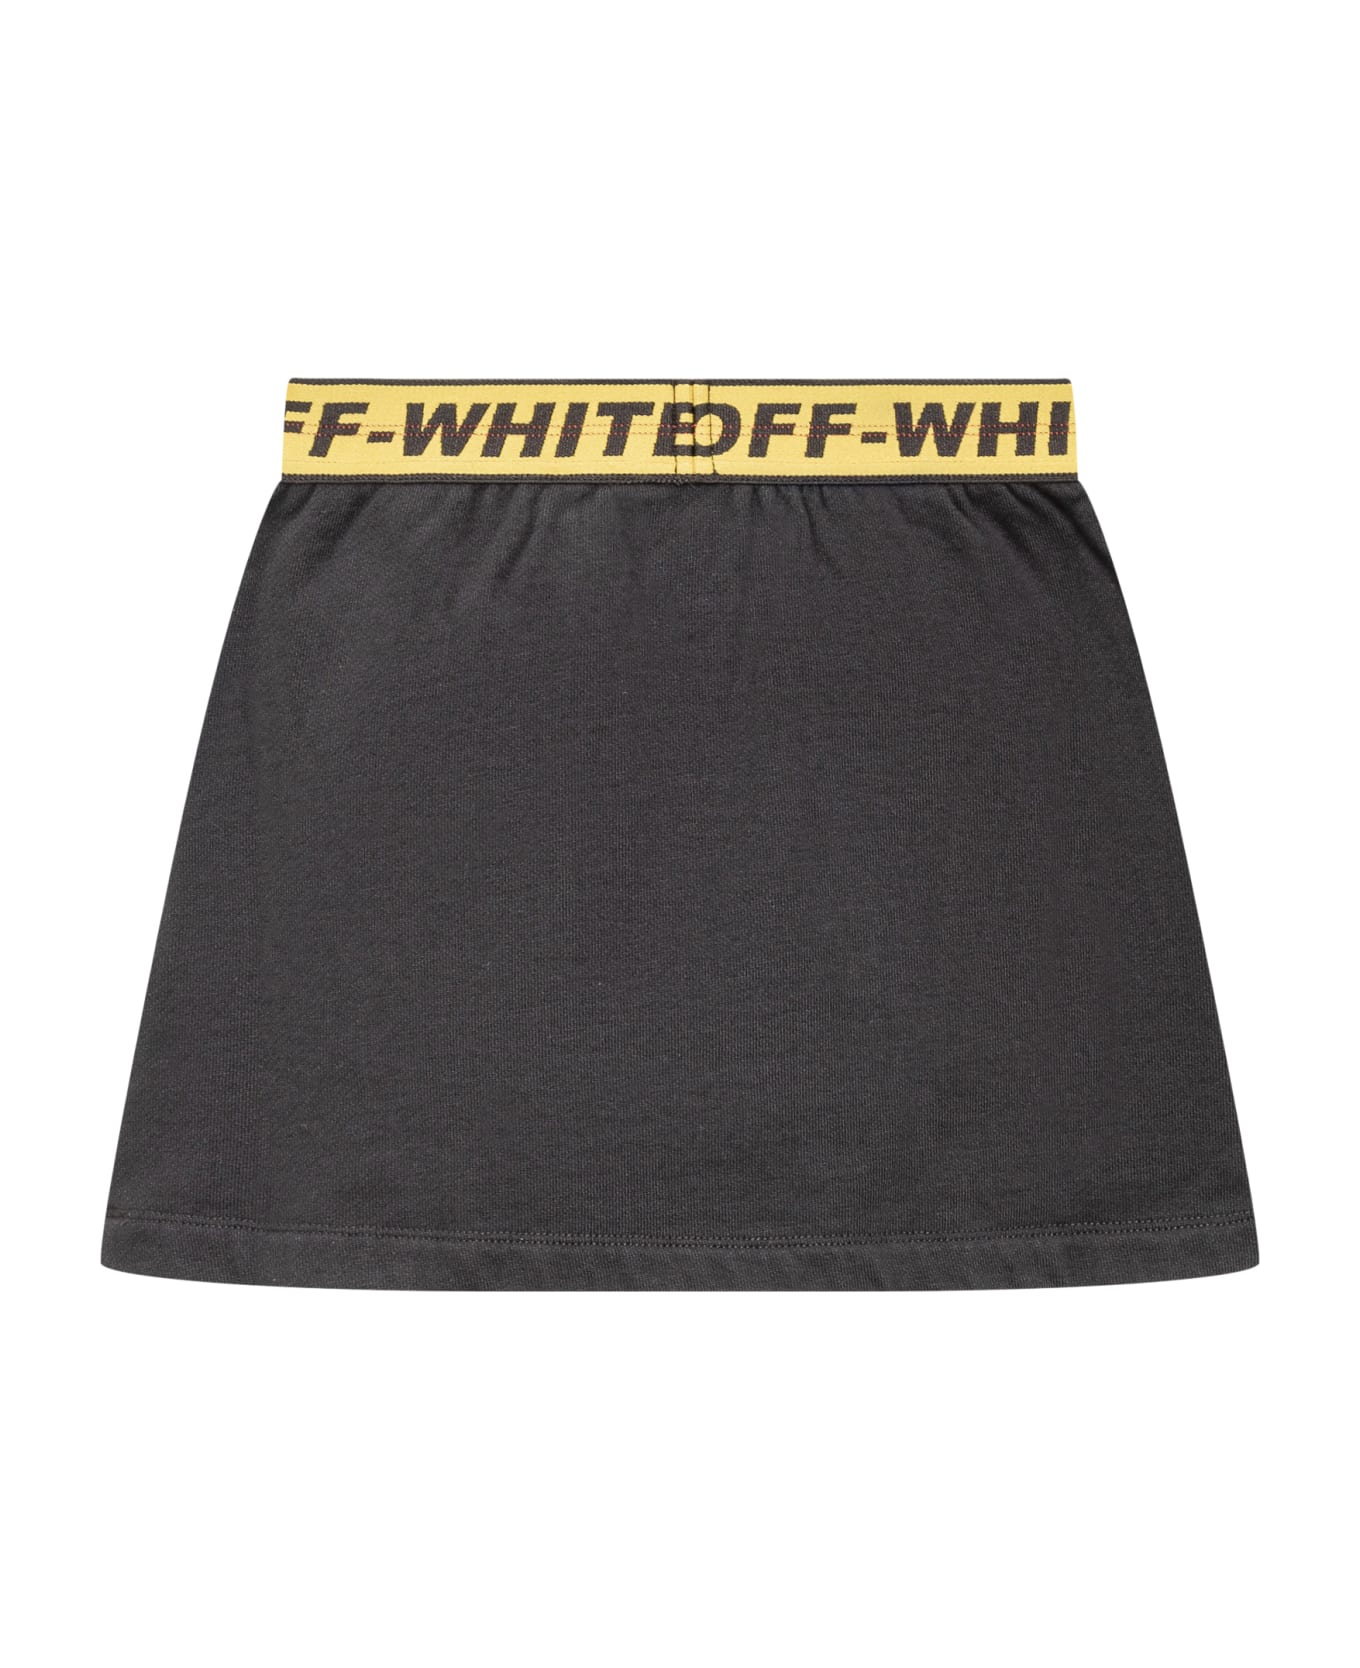 Off-White Industrial Logo Skirt - Nero ボトムス